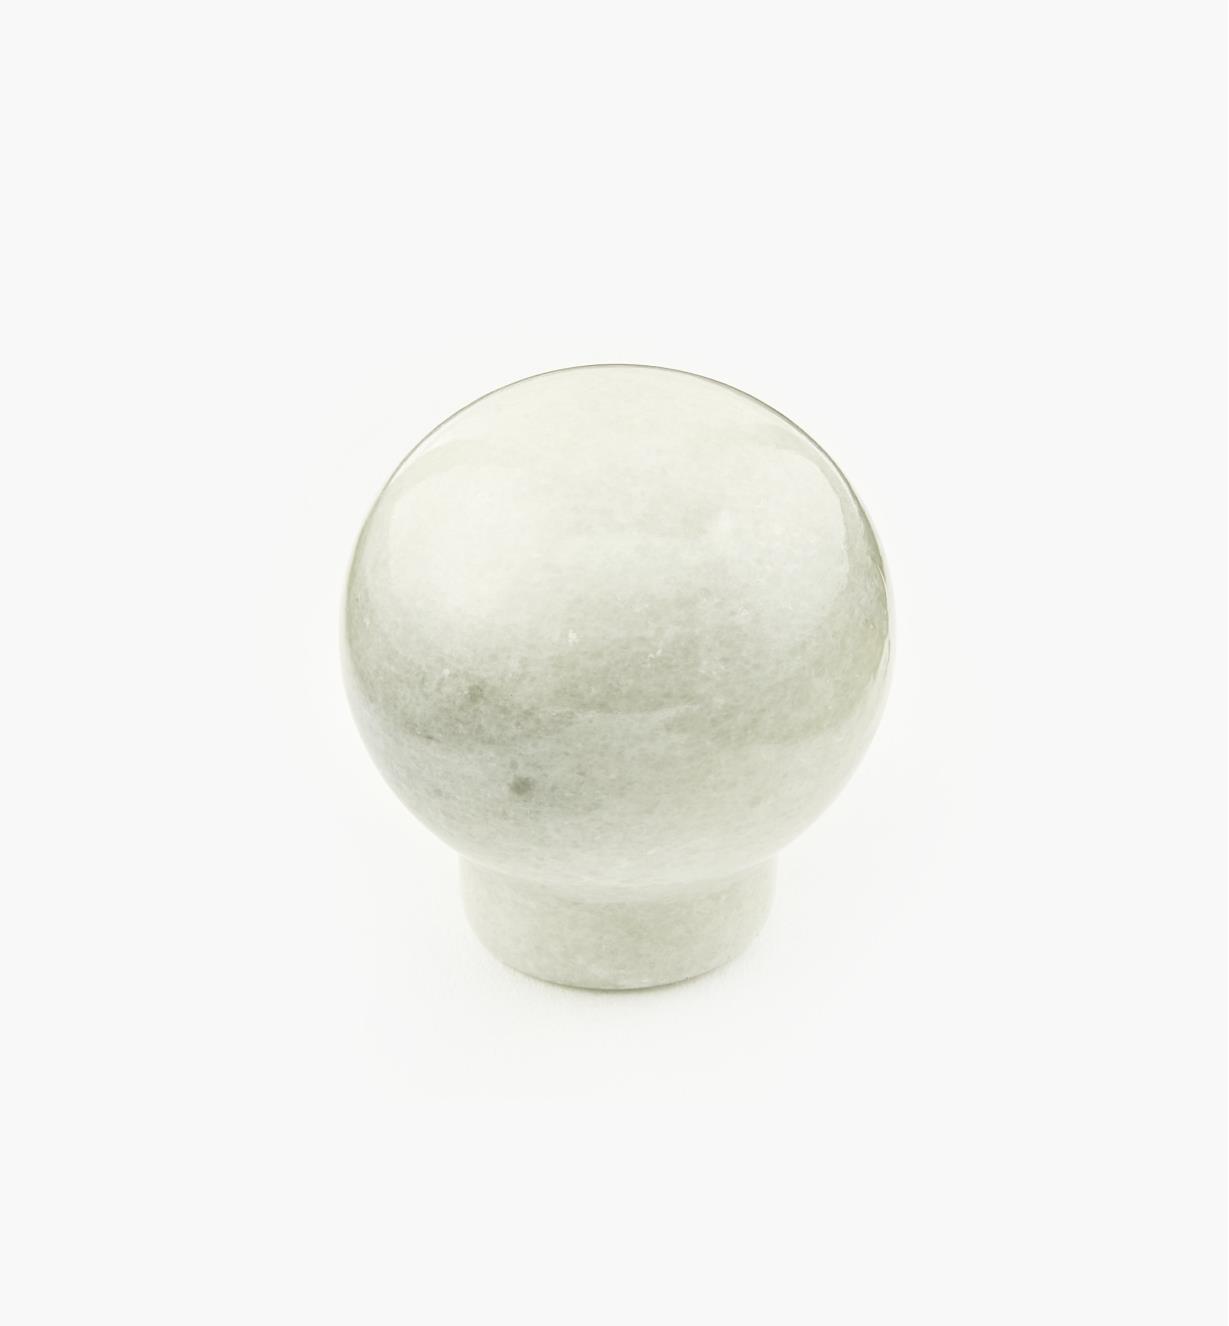 00W4014 - Bouton en marbre, blanc, 33,5 mm x 35,5 mm